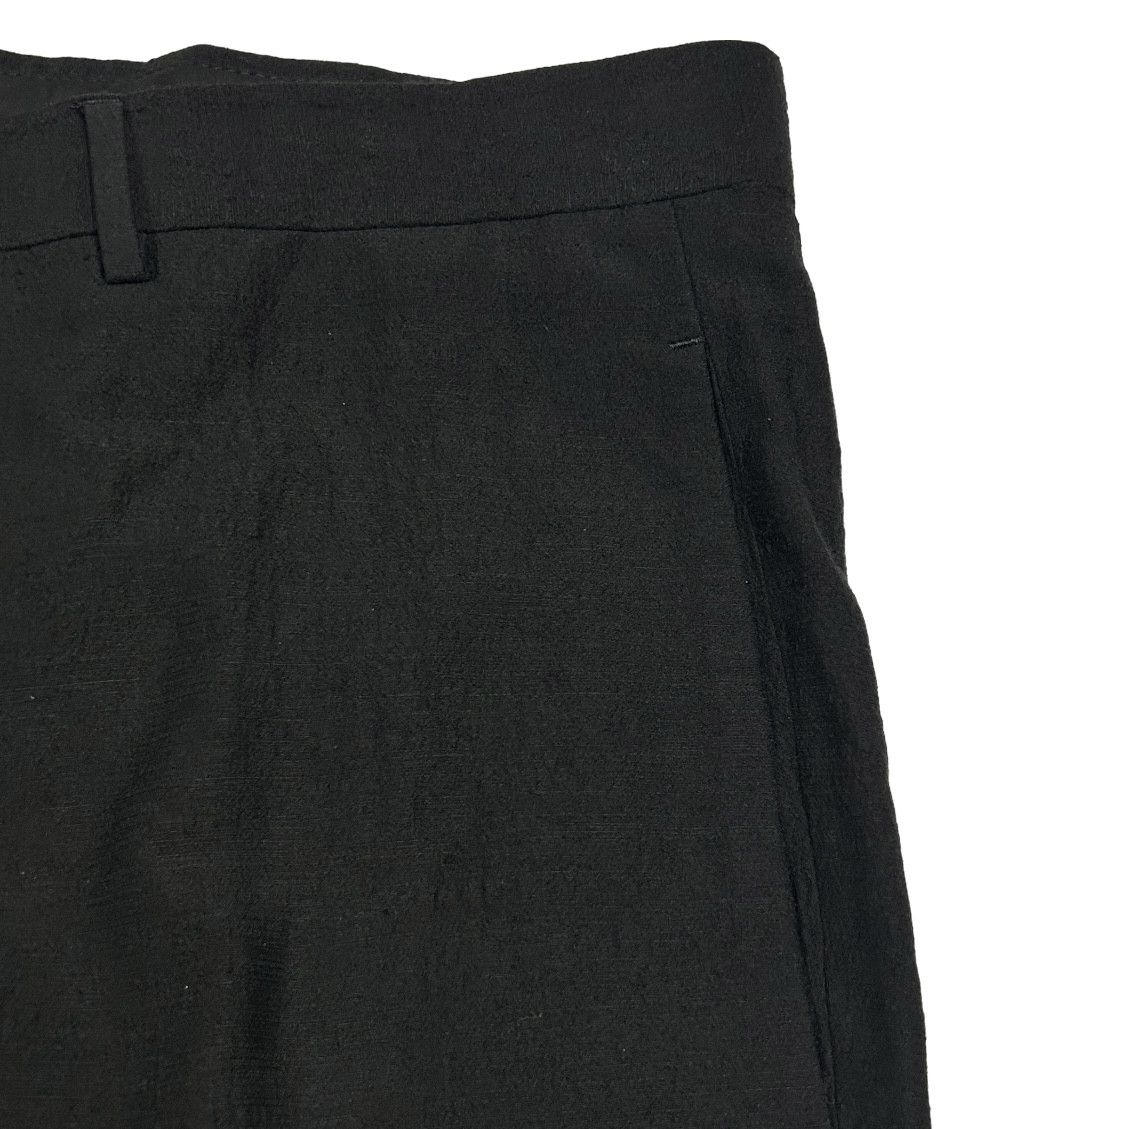 Rick Owens SS20 TECUATL Wool Cropped Pants Size US 38 / EU 54 - 3 Thumbnail